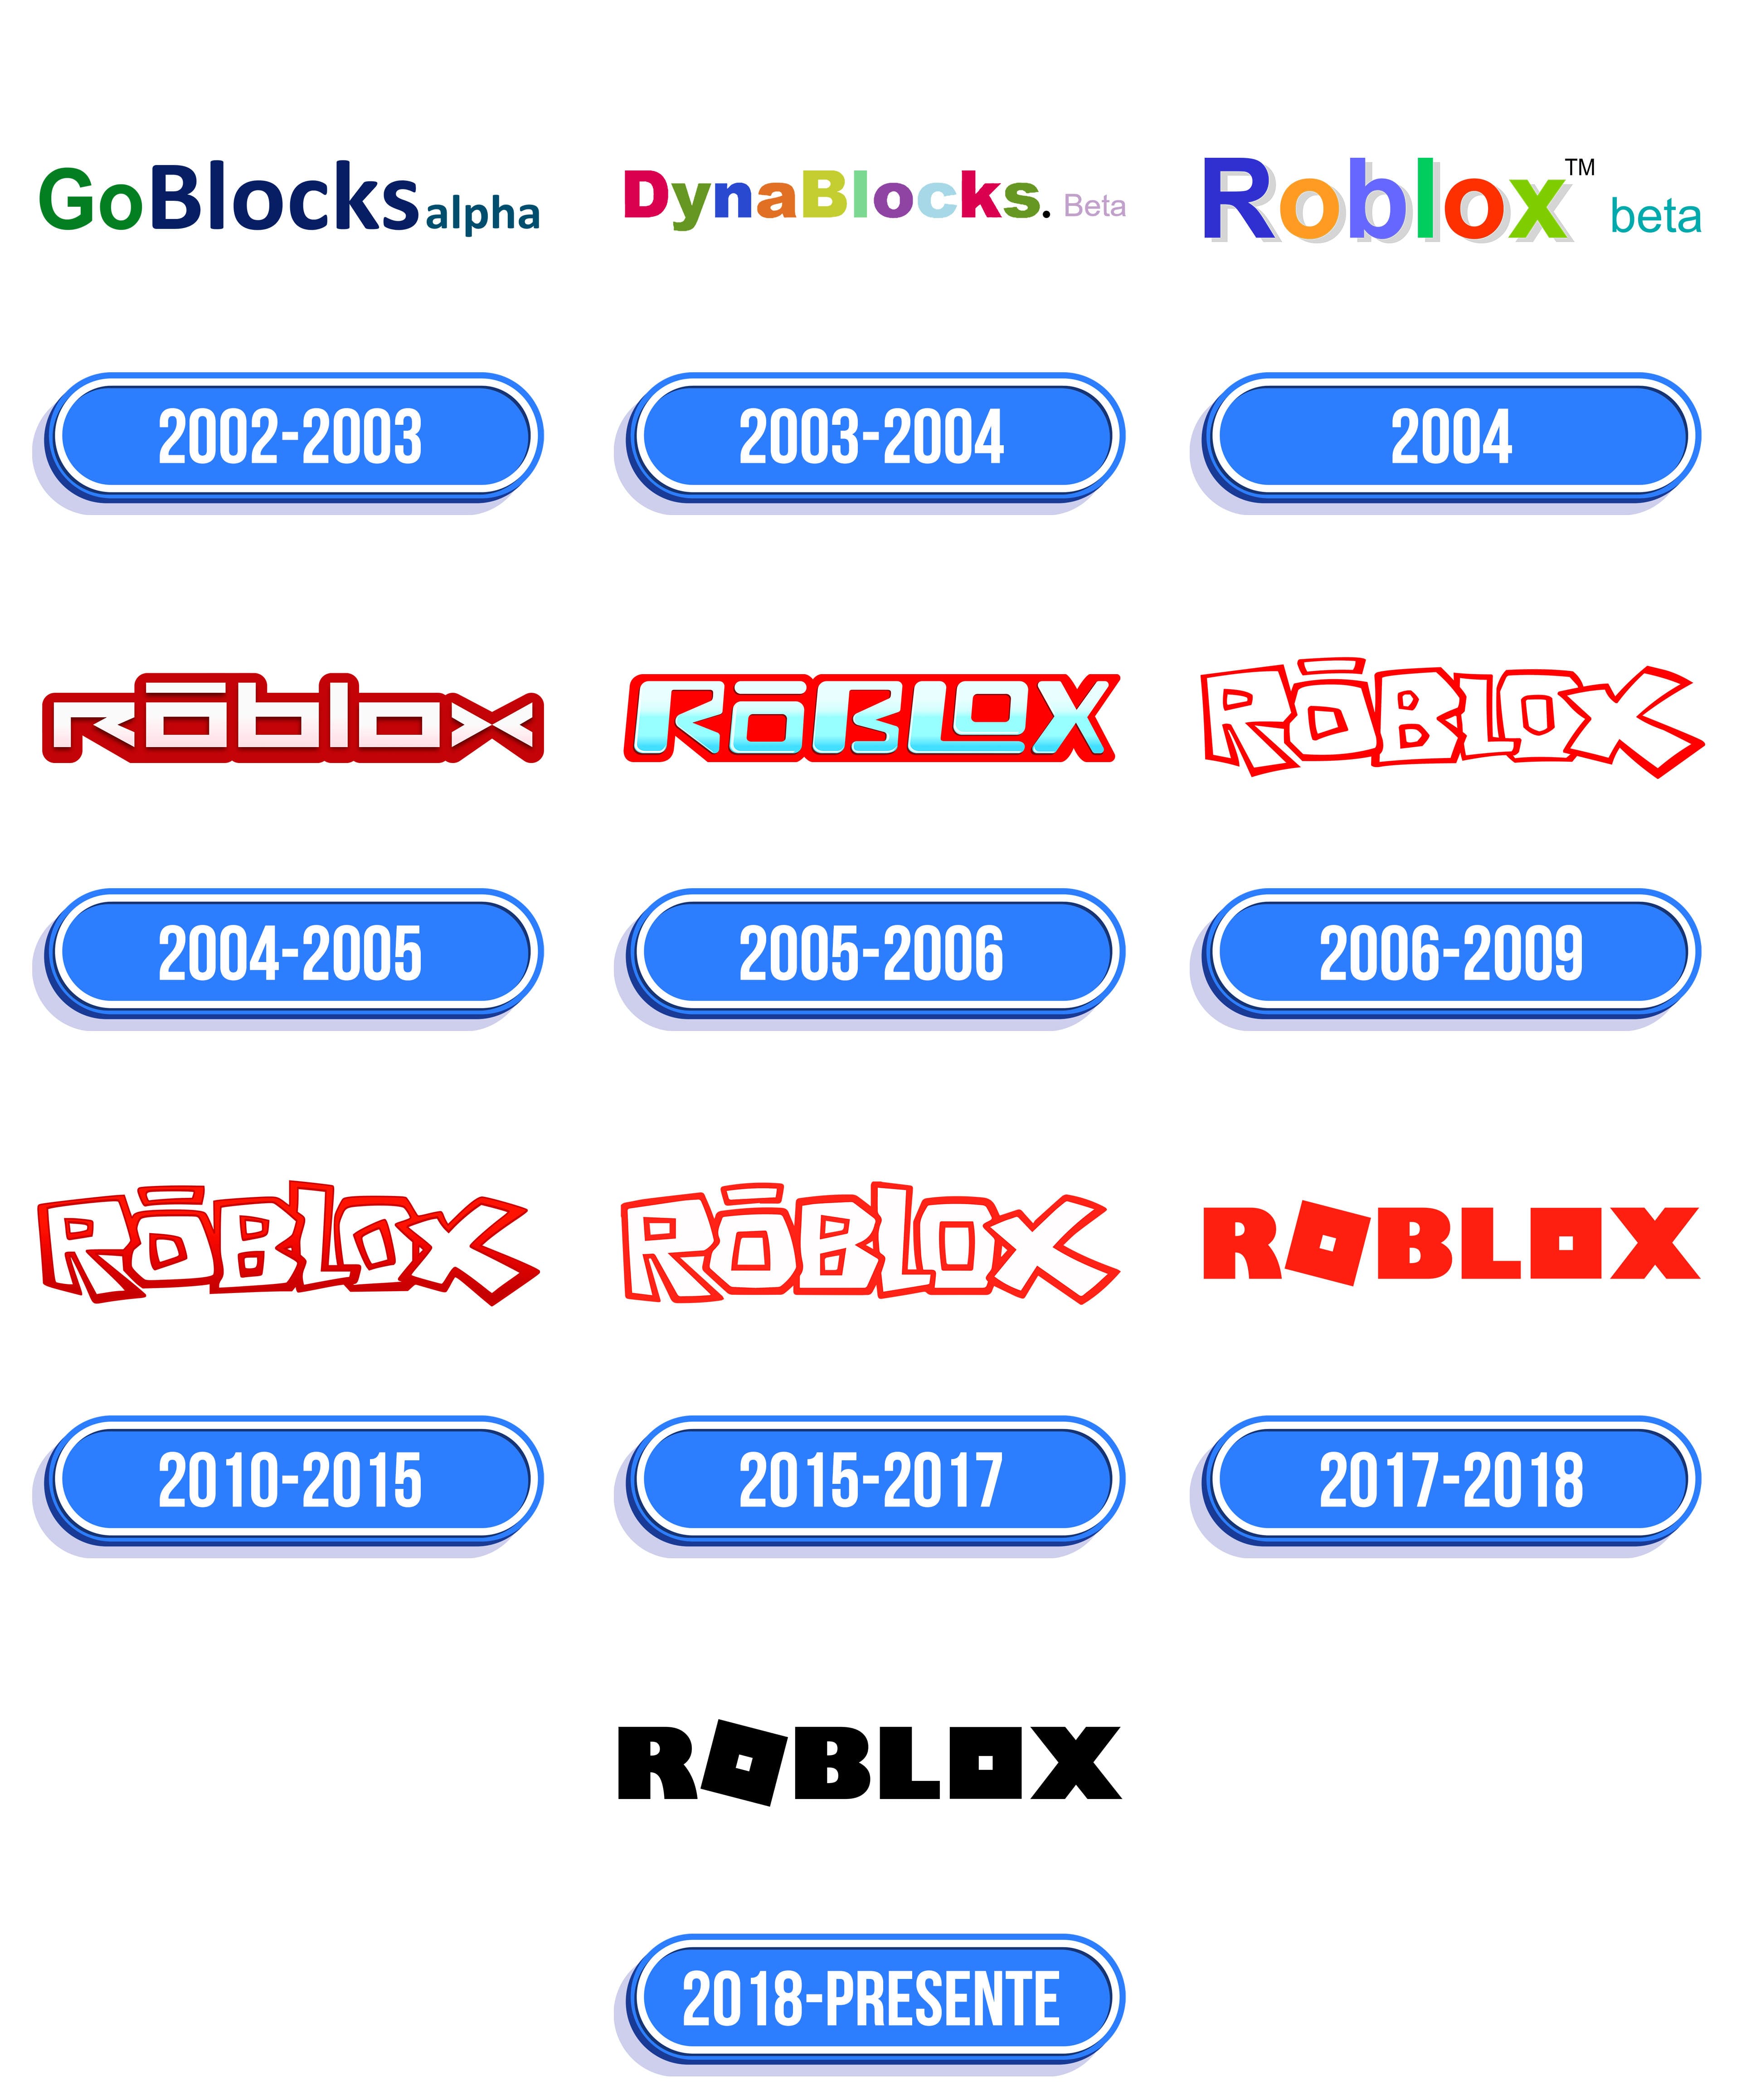 Roblox group logo size - lkakvista